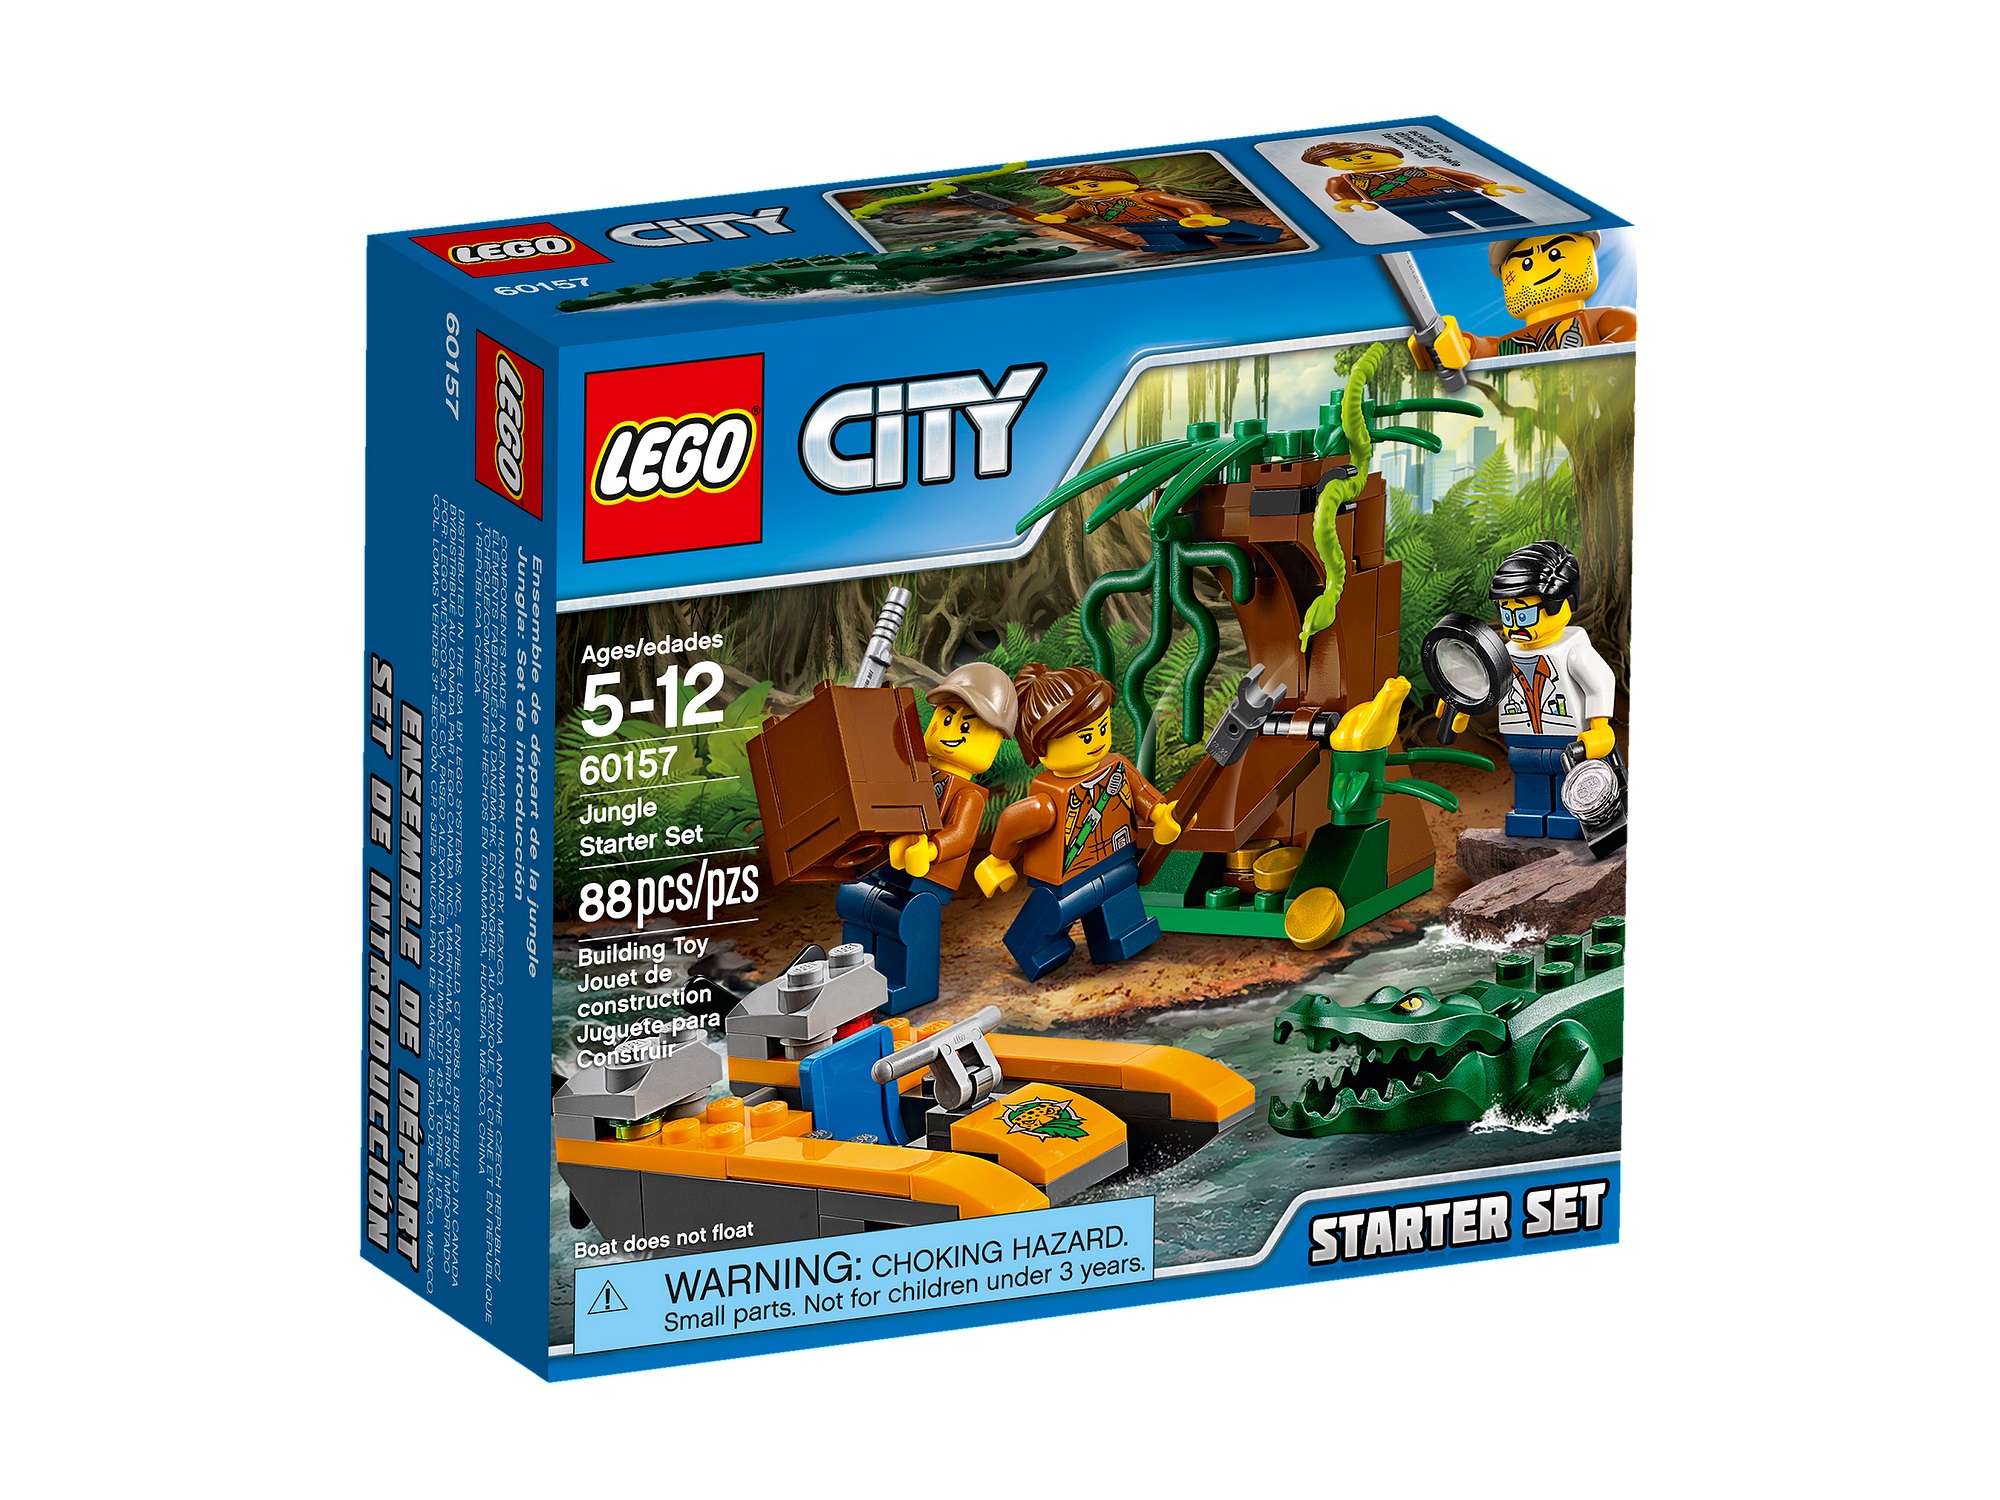 Preview: LEGO City Jungle 2017 sets